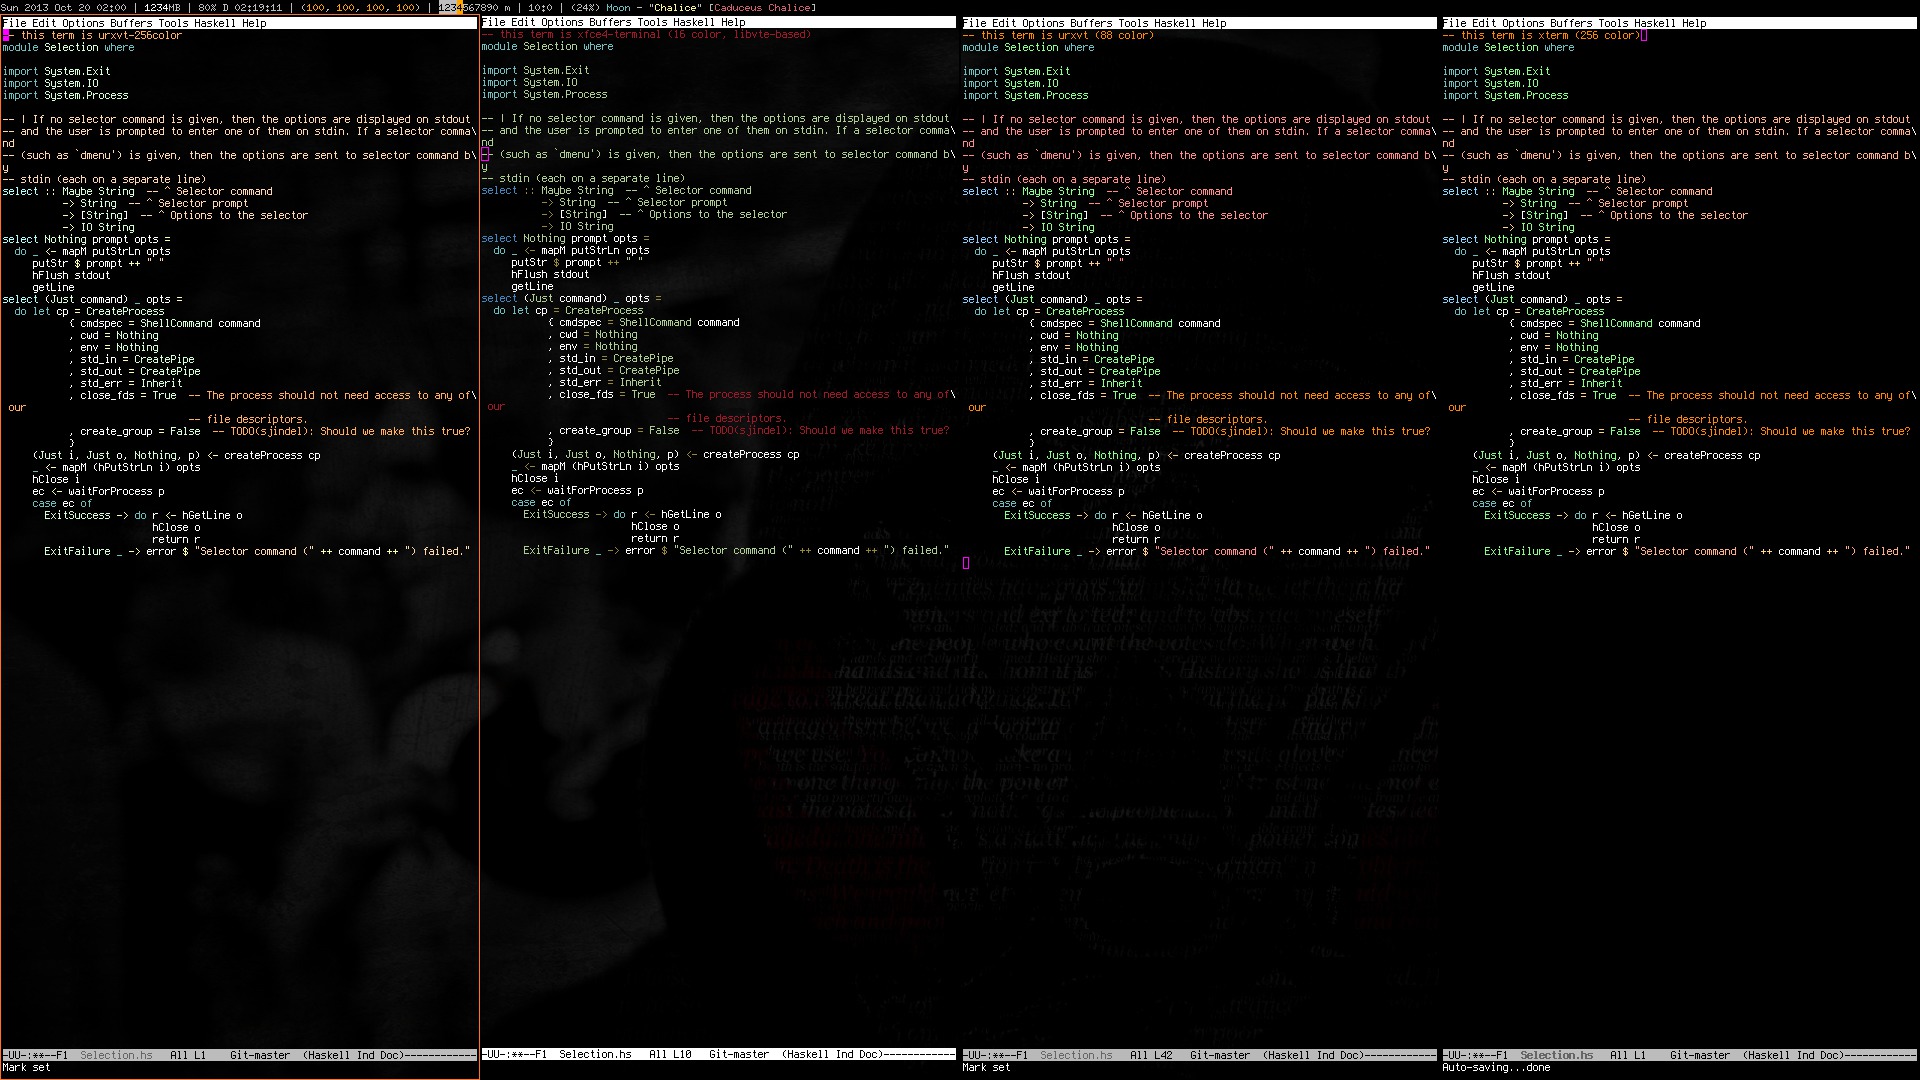 xterm (256) versus xfce4-terminal (16 color, libvte) versus urxvt-88 versus urxvt0256